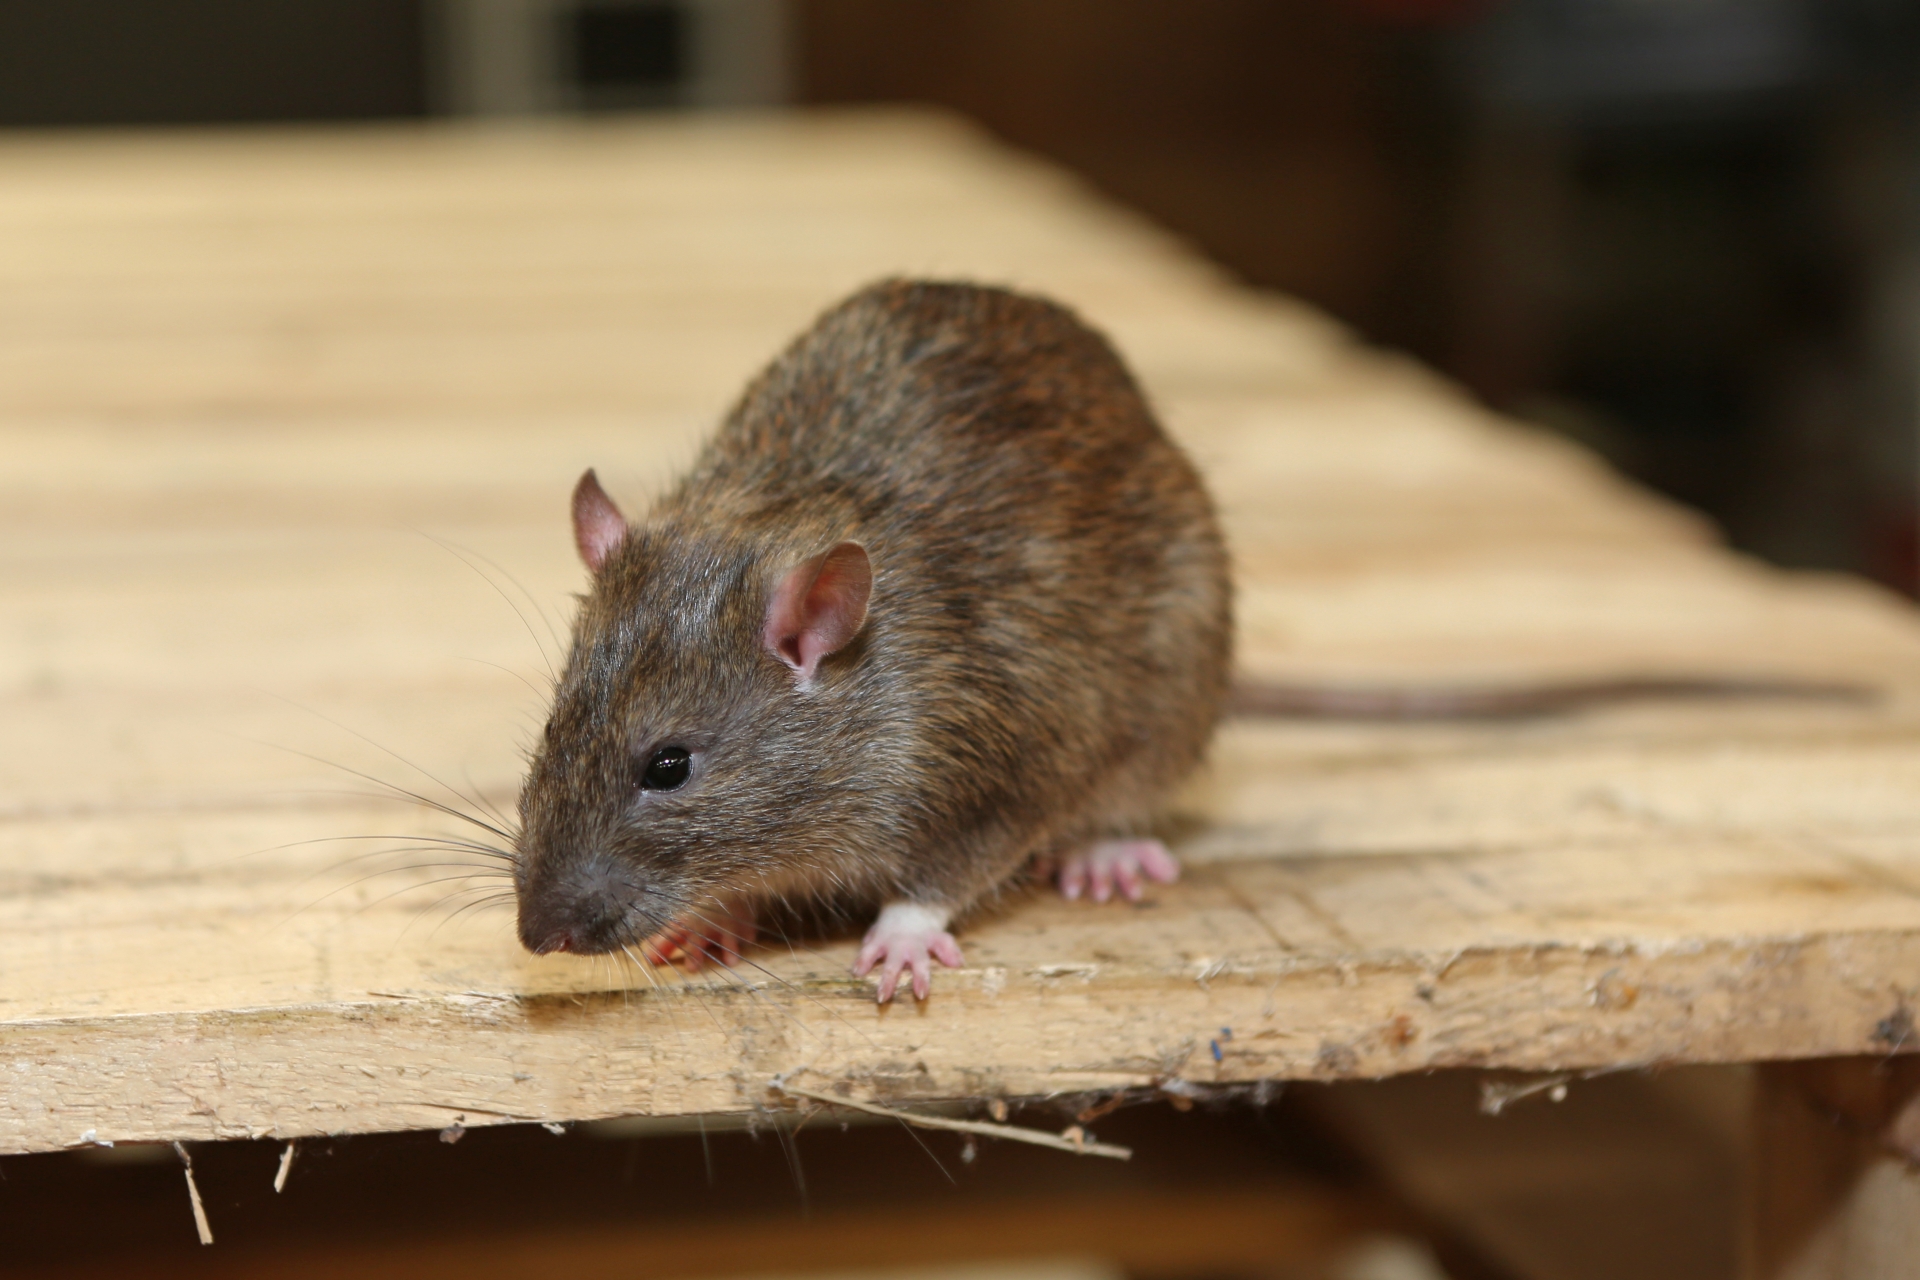 Rat extermination, Pest Control in Clapton, E5. Call Now 020 8166 9746